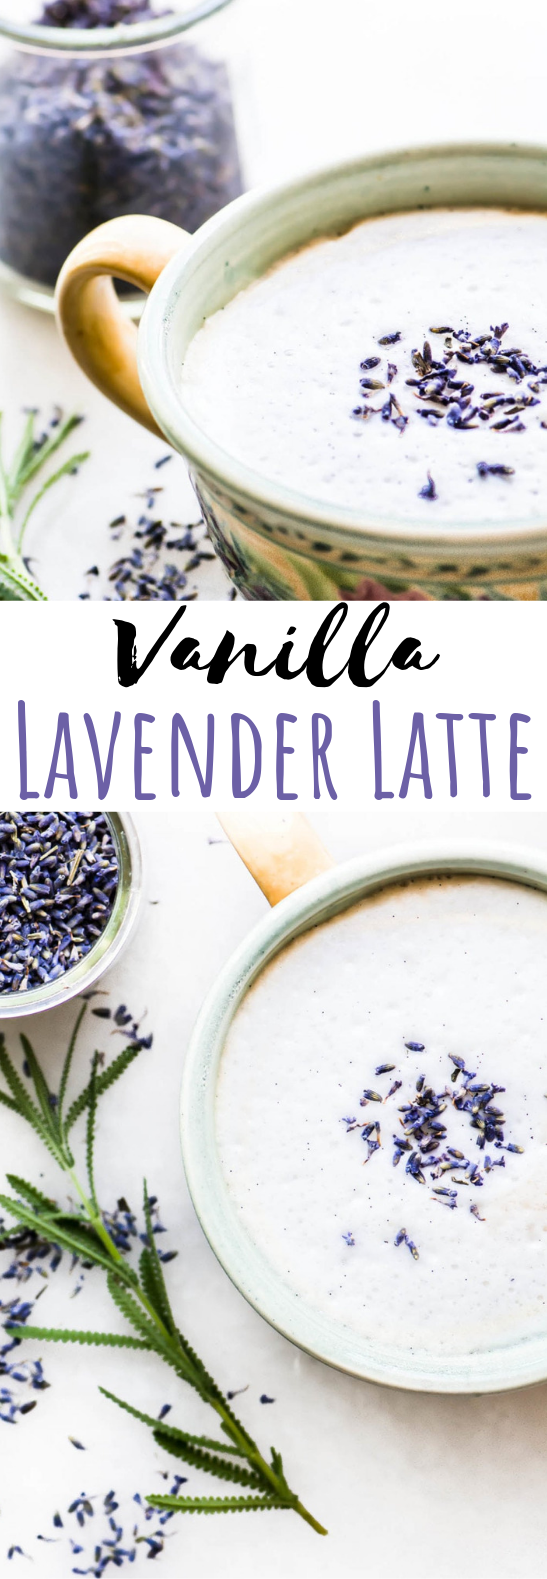 Vanilla Lavender Latte #drinks #latte